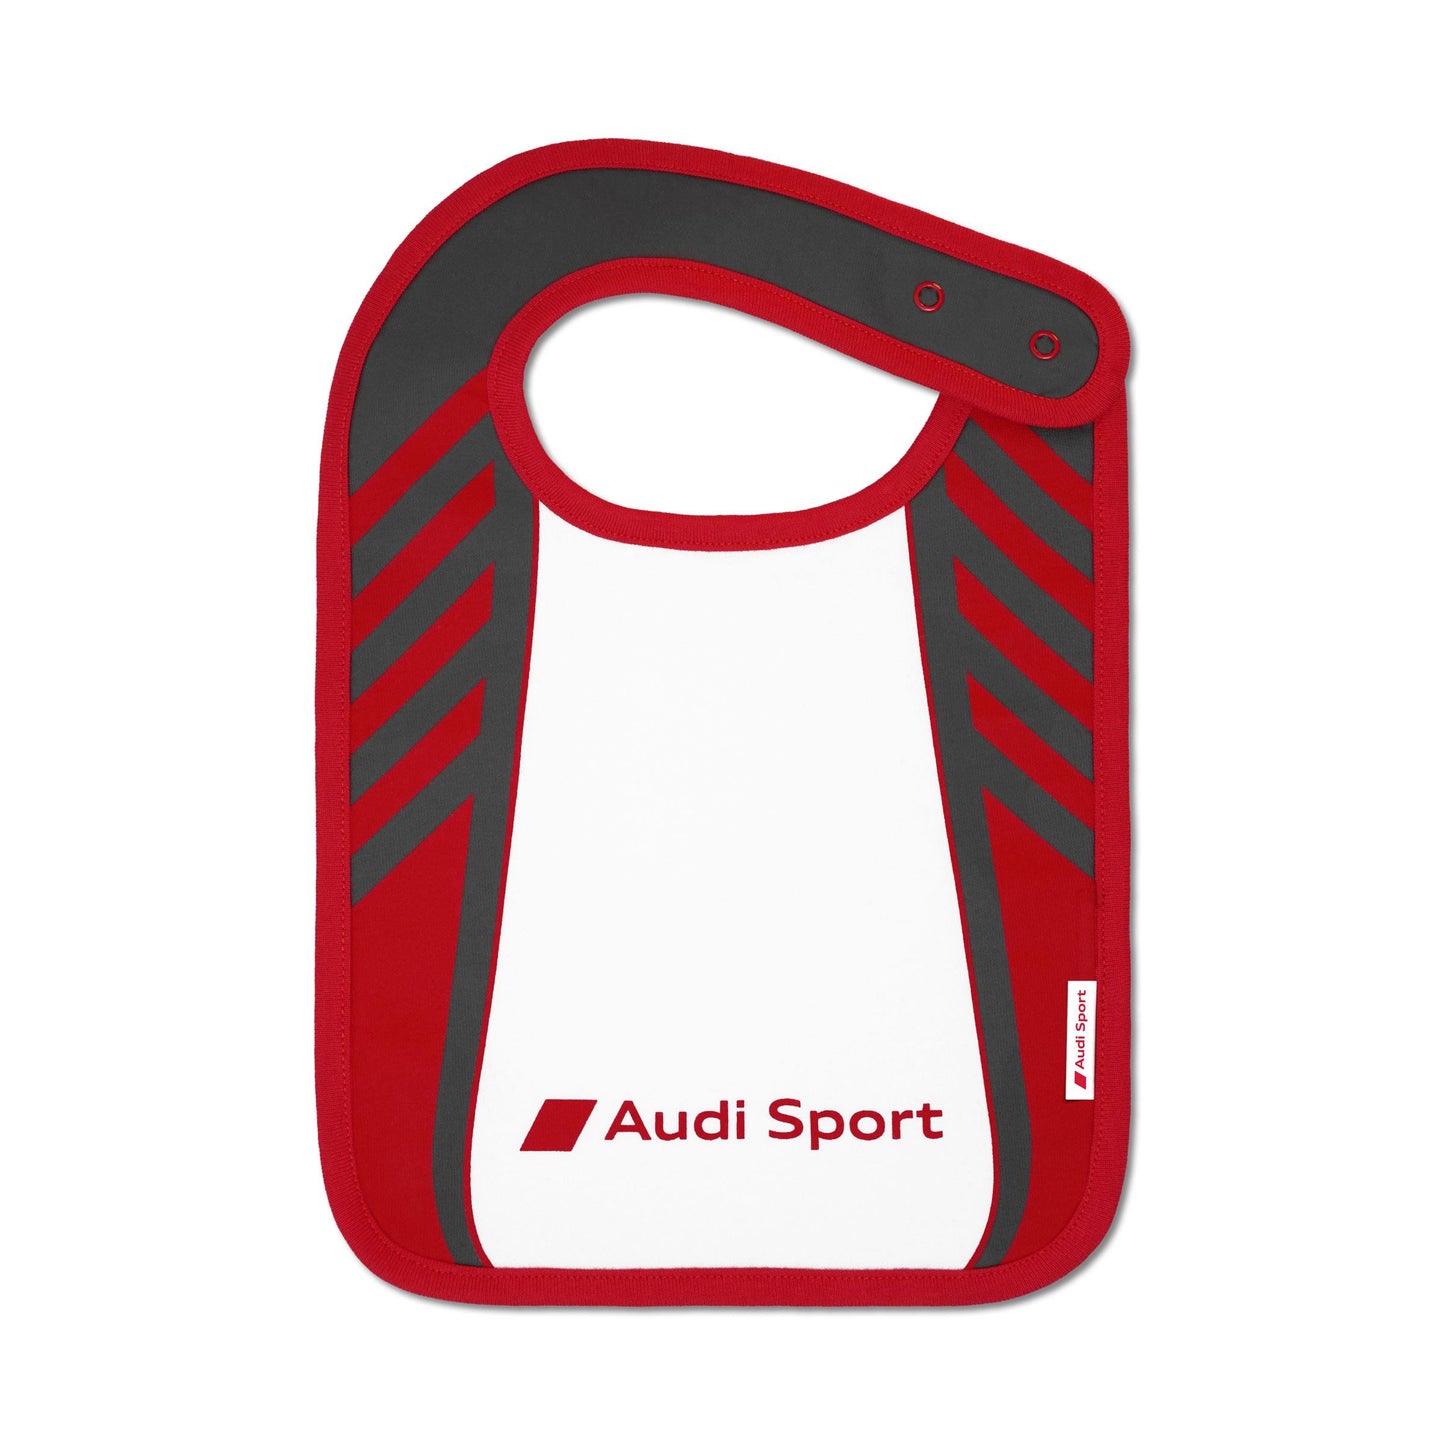 Audi Sport baby bib, 2 piece set